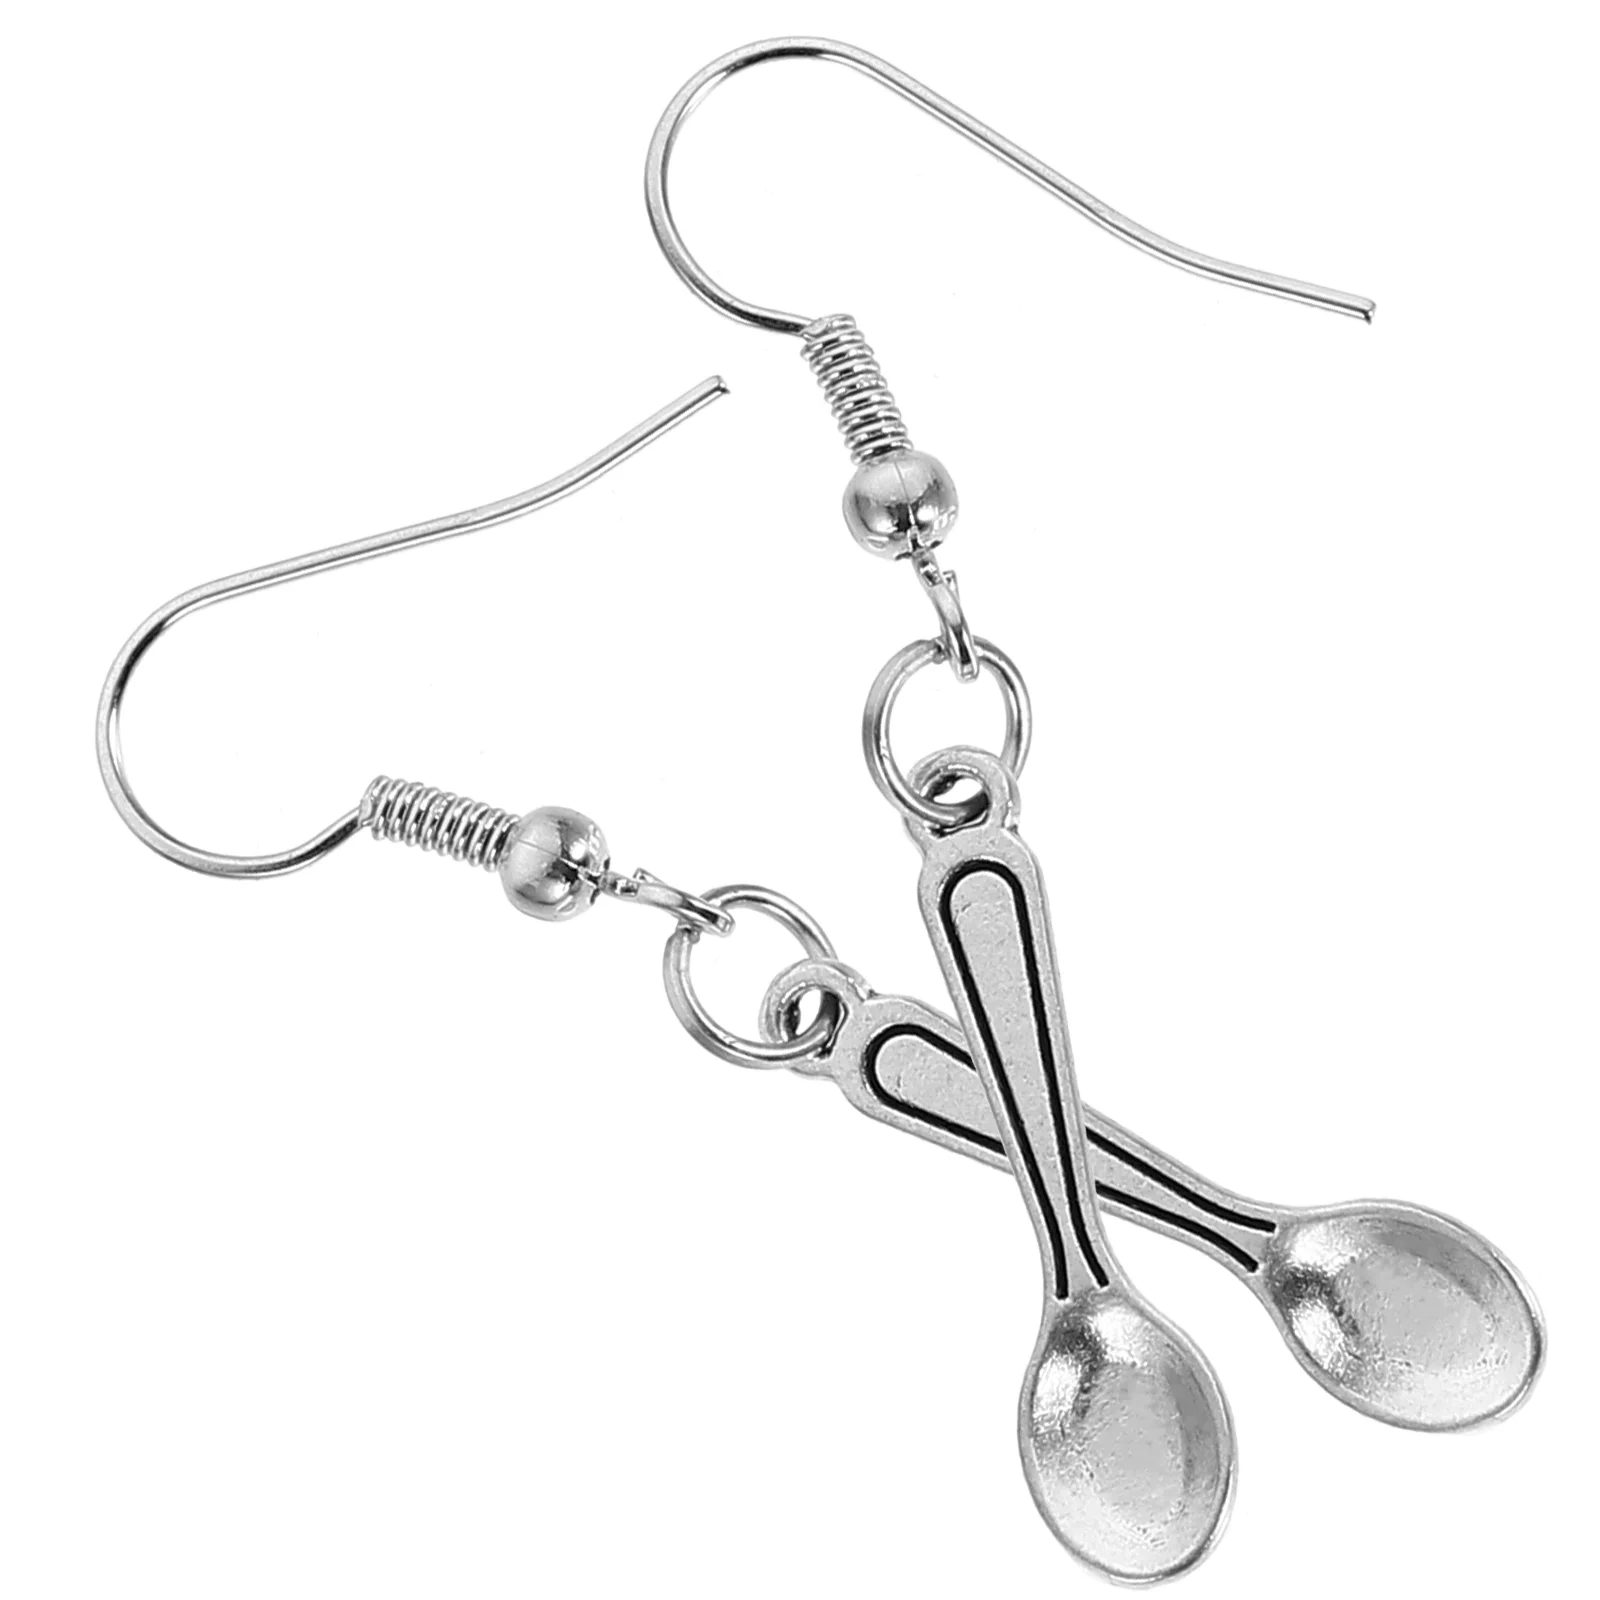 

1 Pair of Fashion Earrings Mini Spoon Dangling Earrings Cute Scoop Earrings